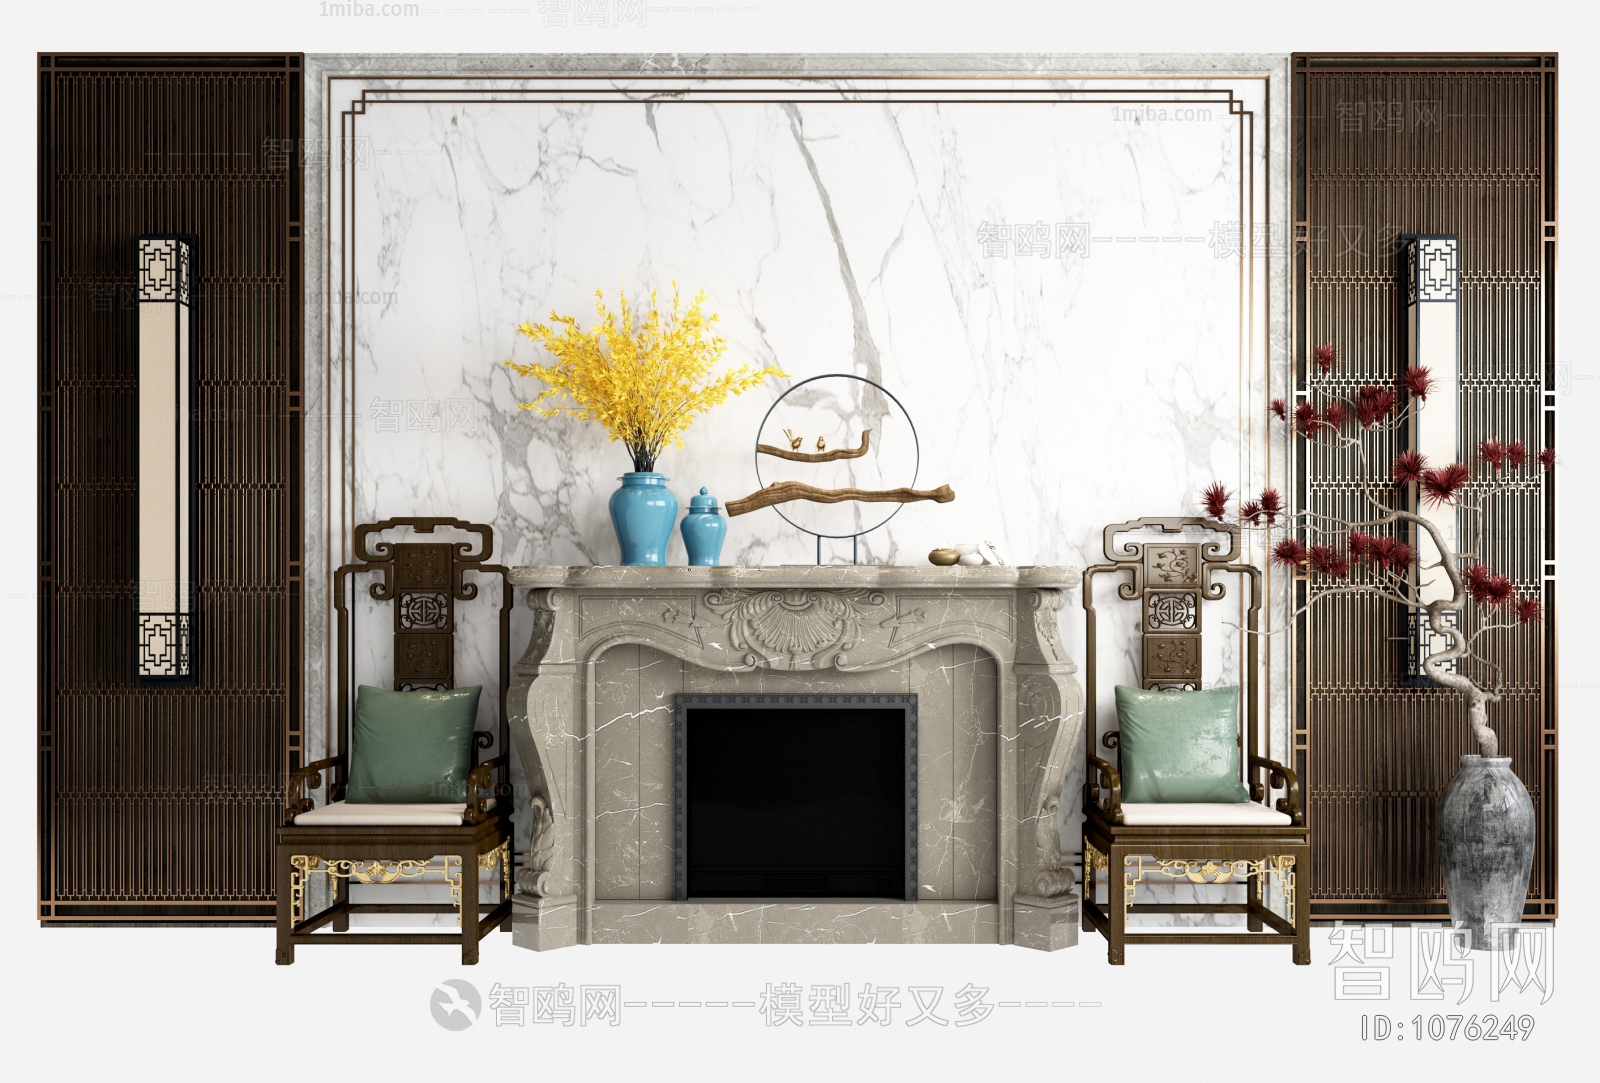 New Chinese Style Fireplace